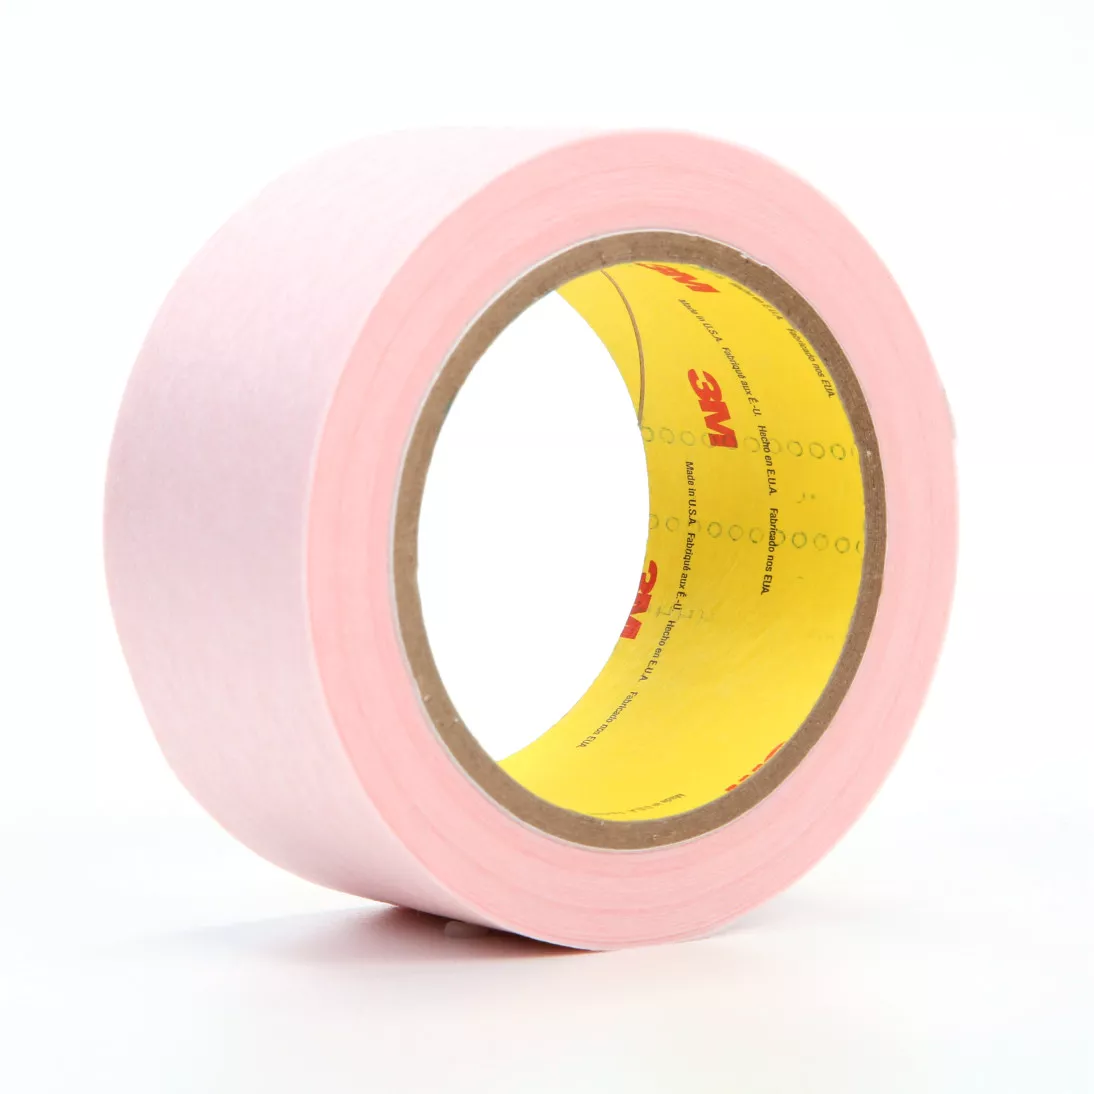 3M™ Venting Tape 3294, Pink, 2 in x 36 yd, 5 mil, 24 rolls per case